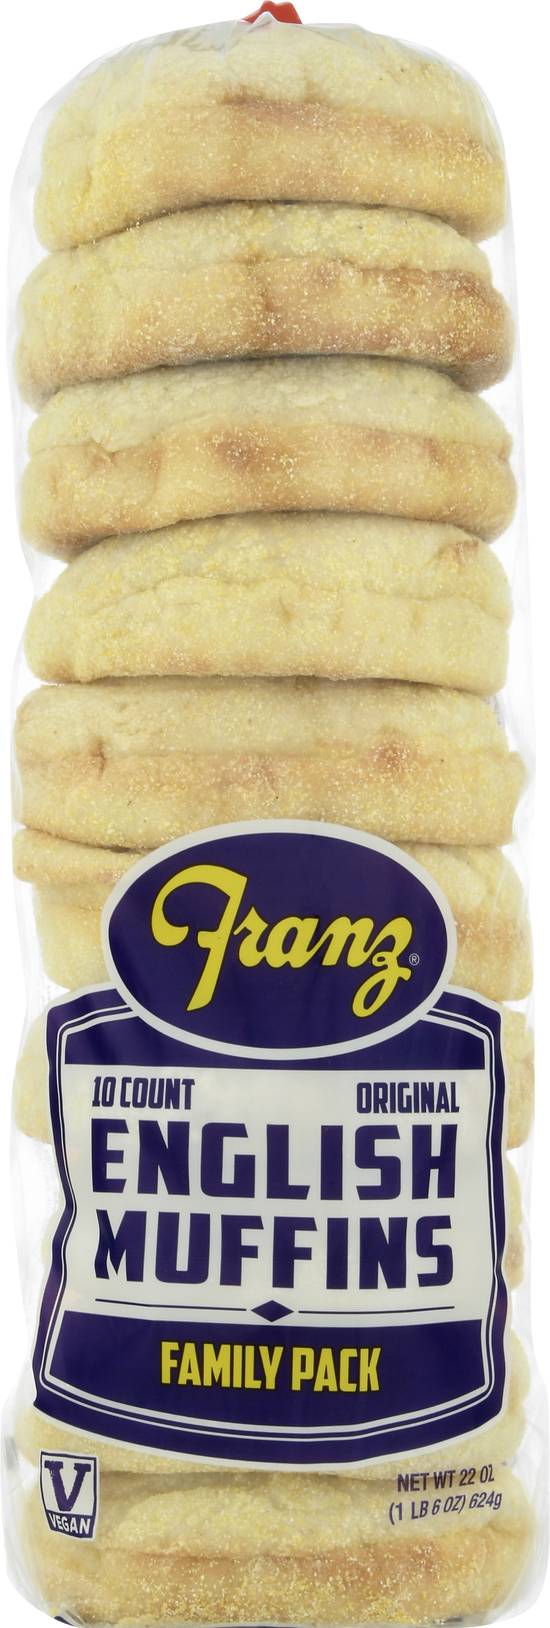 Franz Original English Muffins